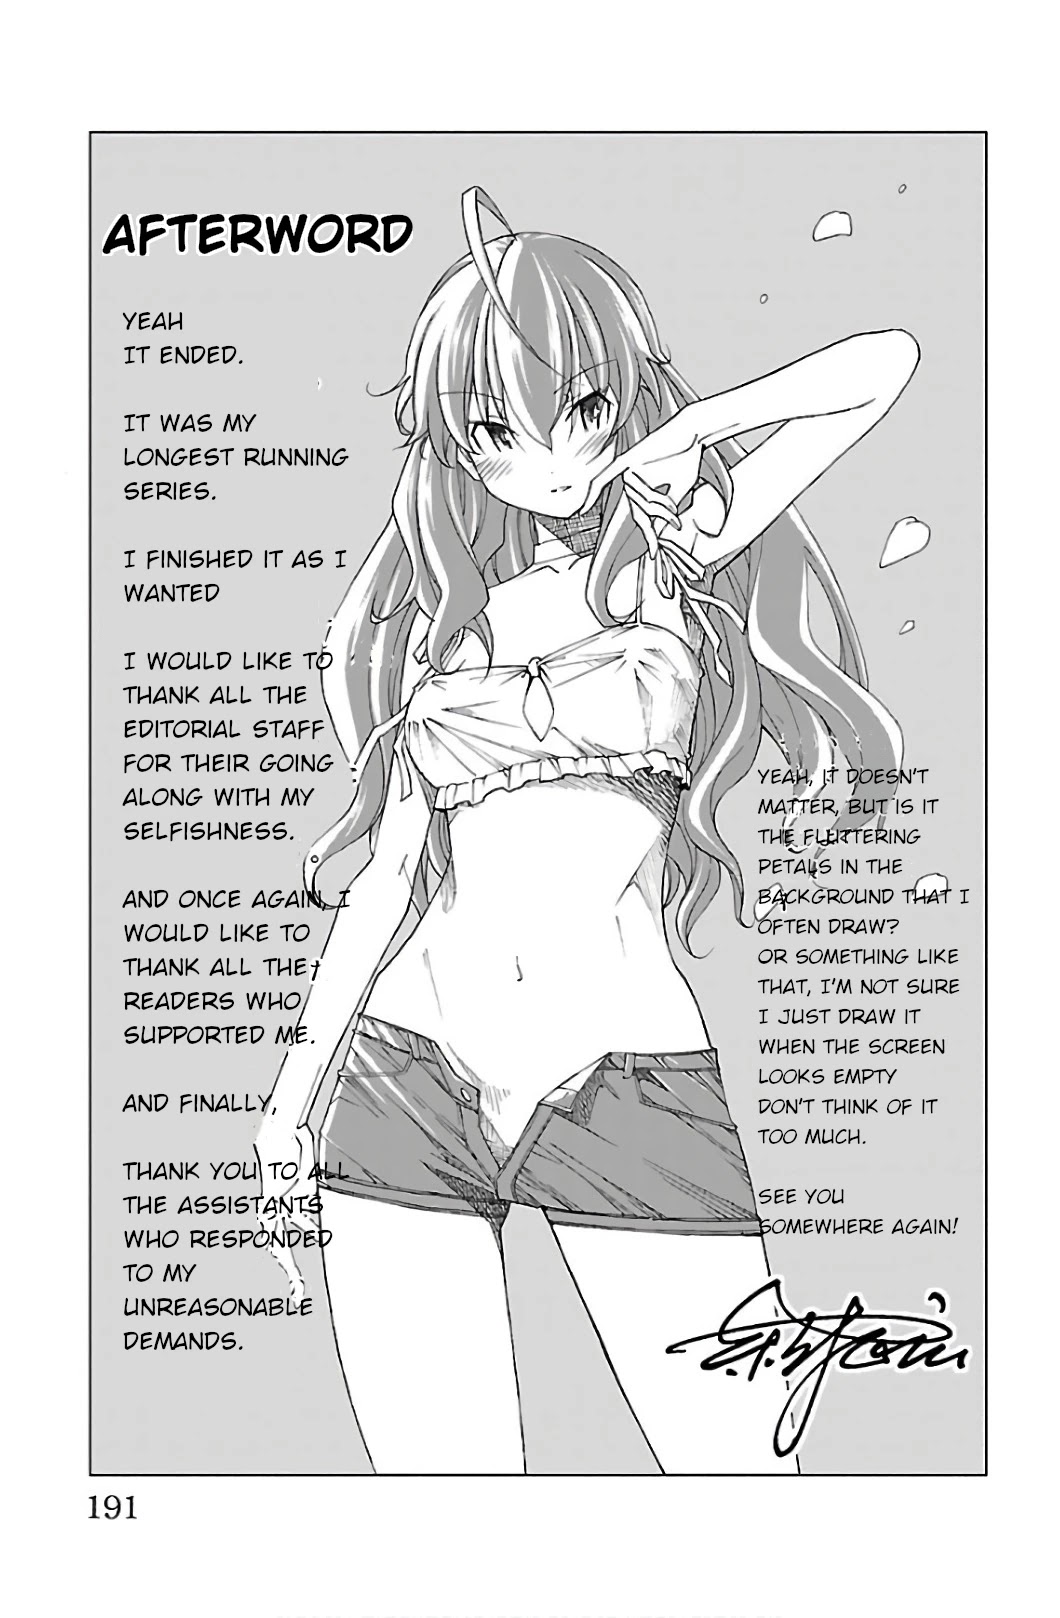 ashley marcou recommends long running hentai manga pic